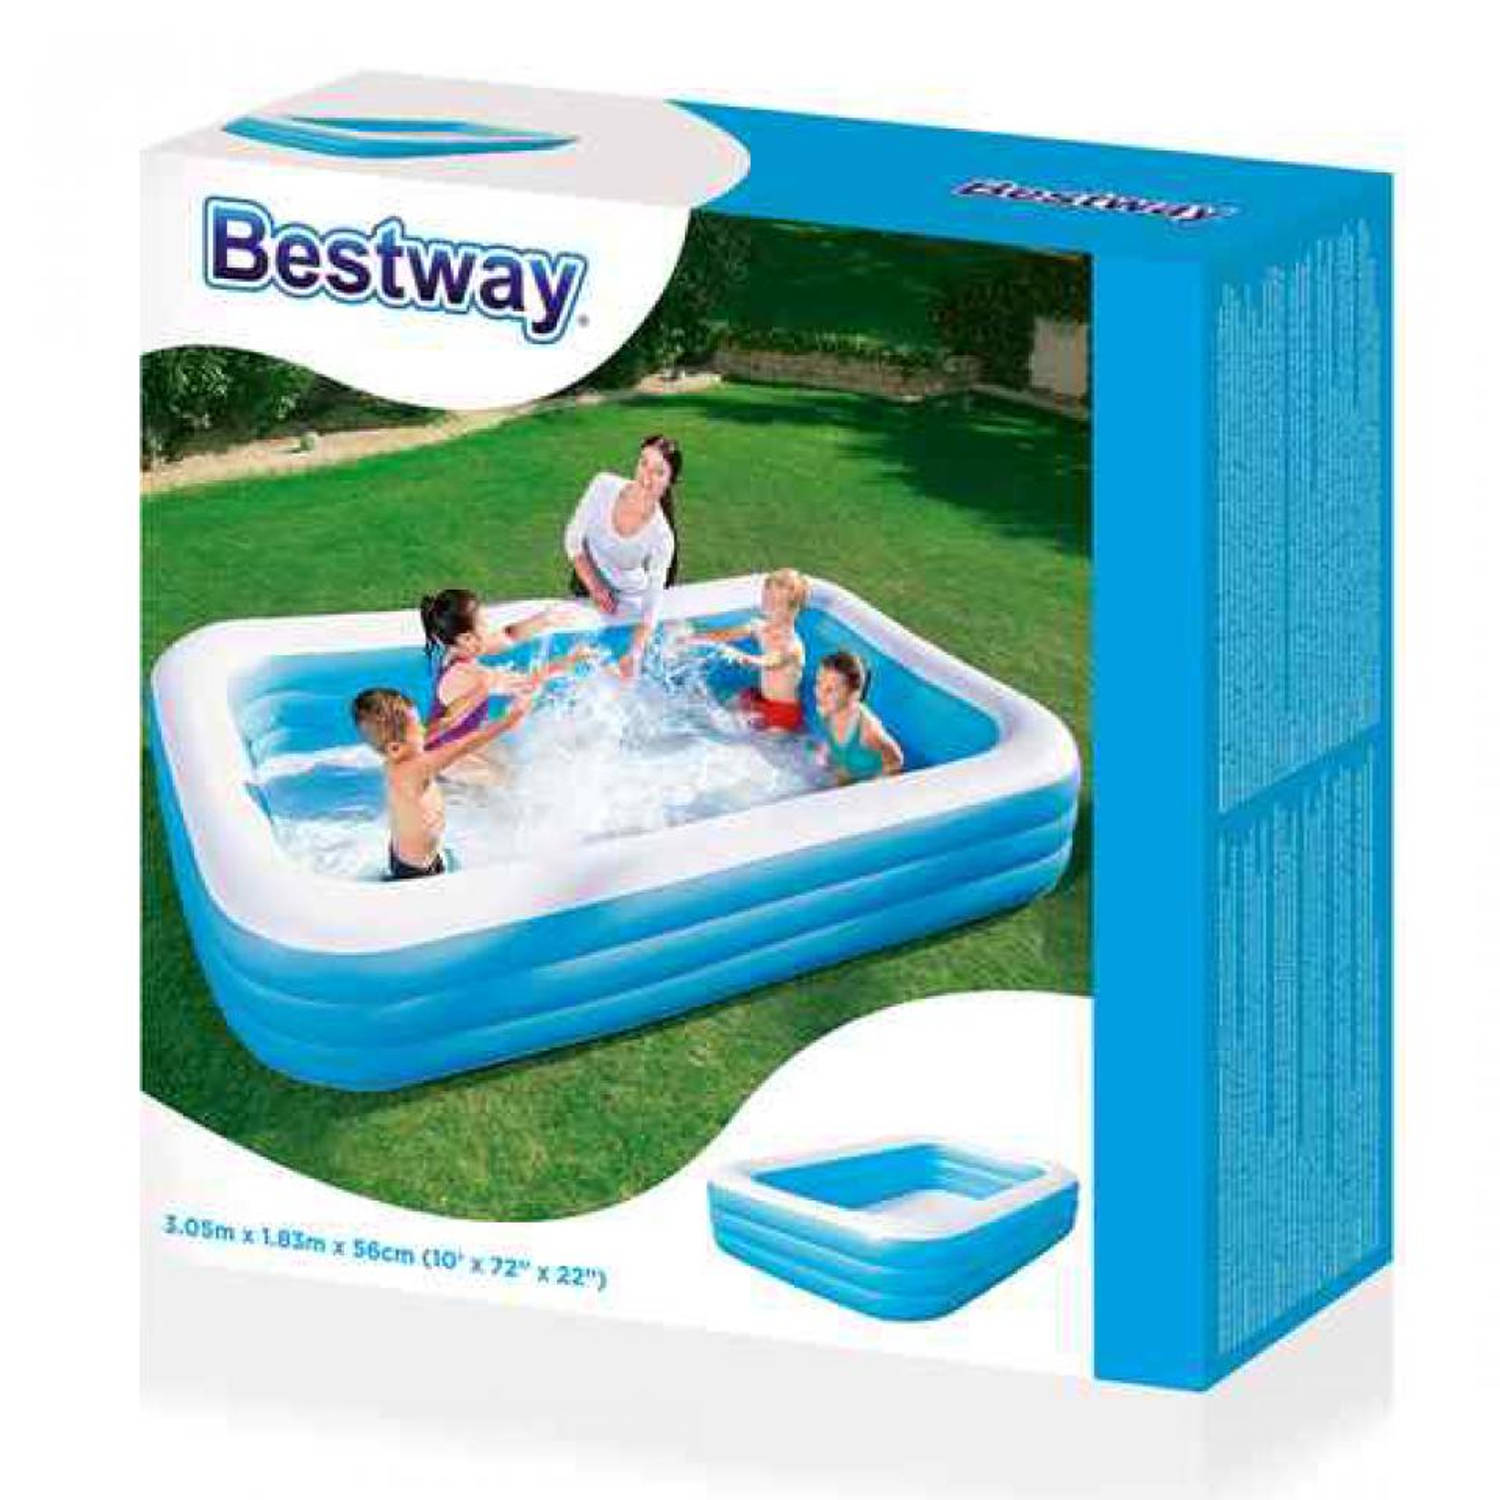 Intact ziekte straffen Bestway familiezwembad - 305x180x55 cm - blauw | Blokker